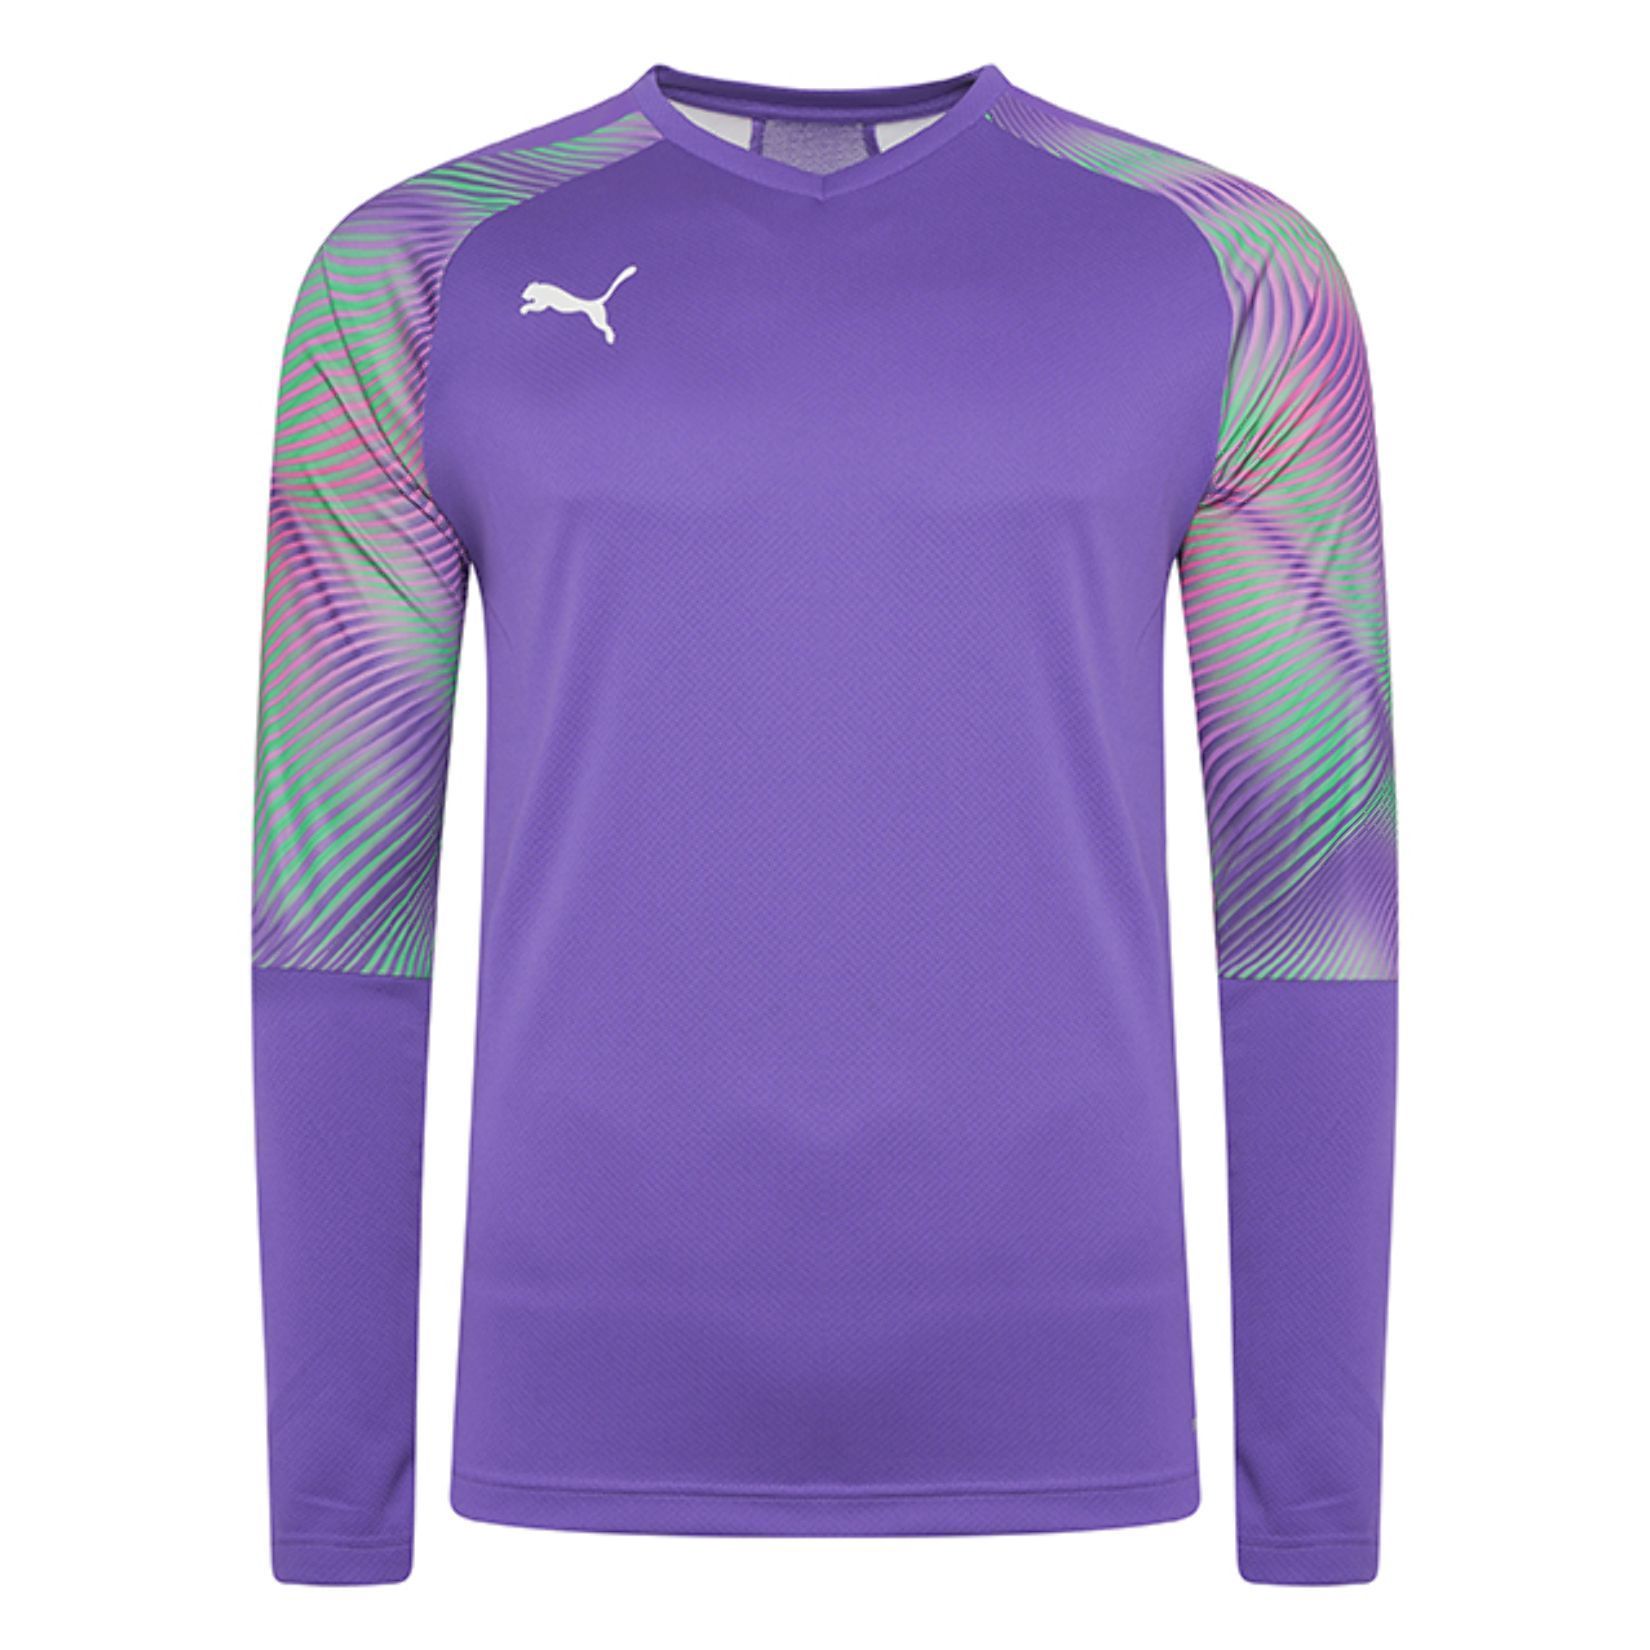 puma goalkeeper kit